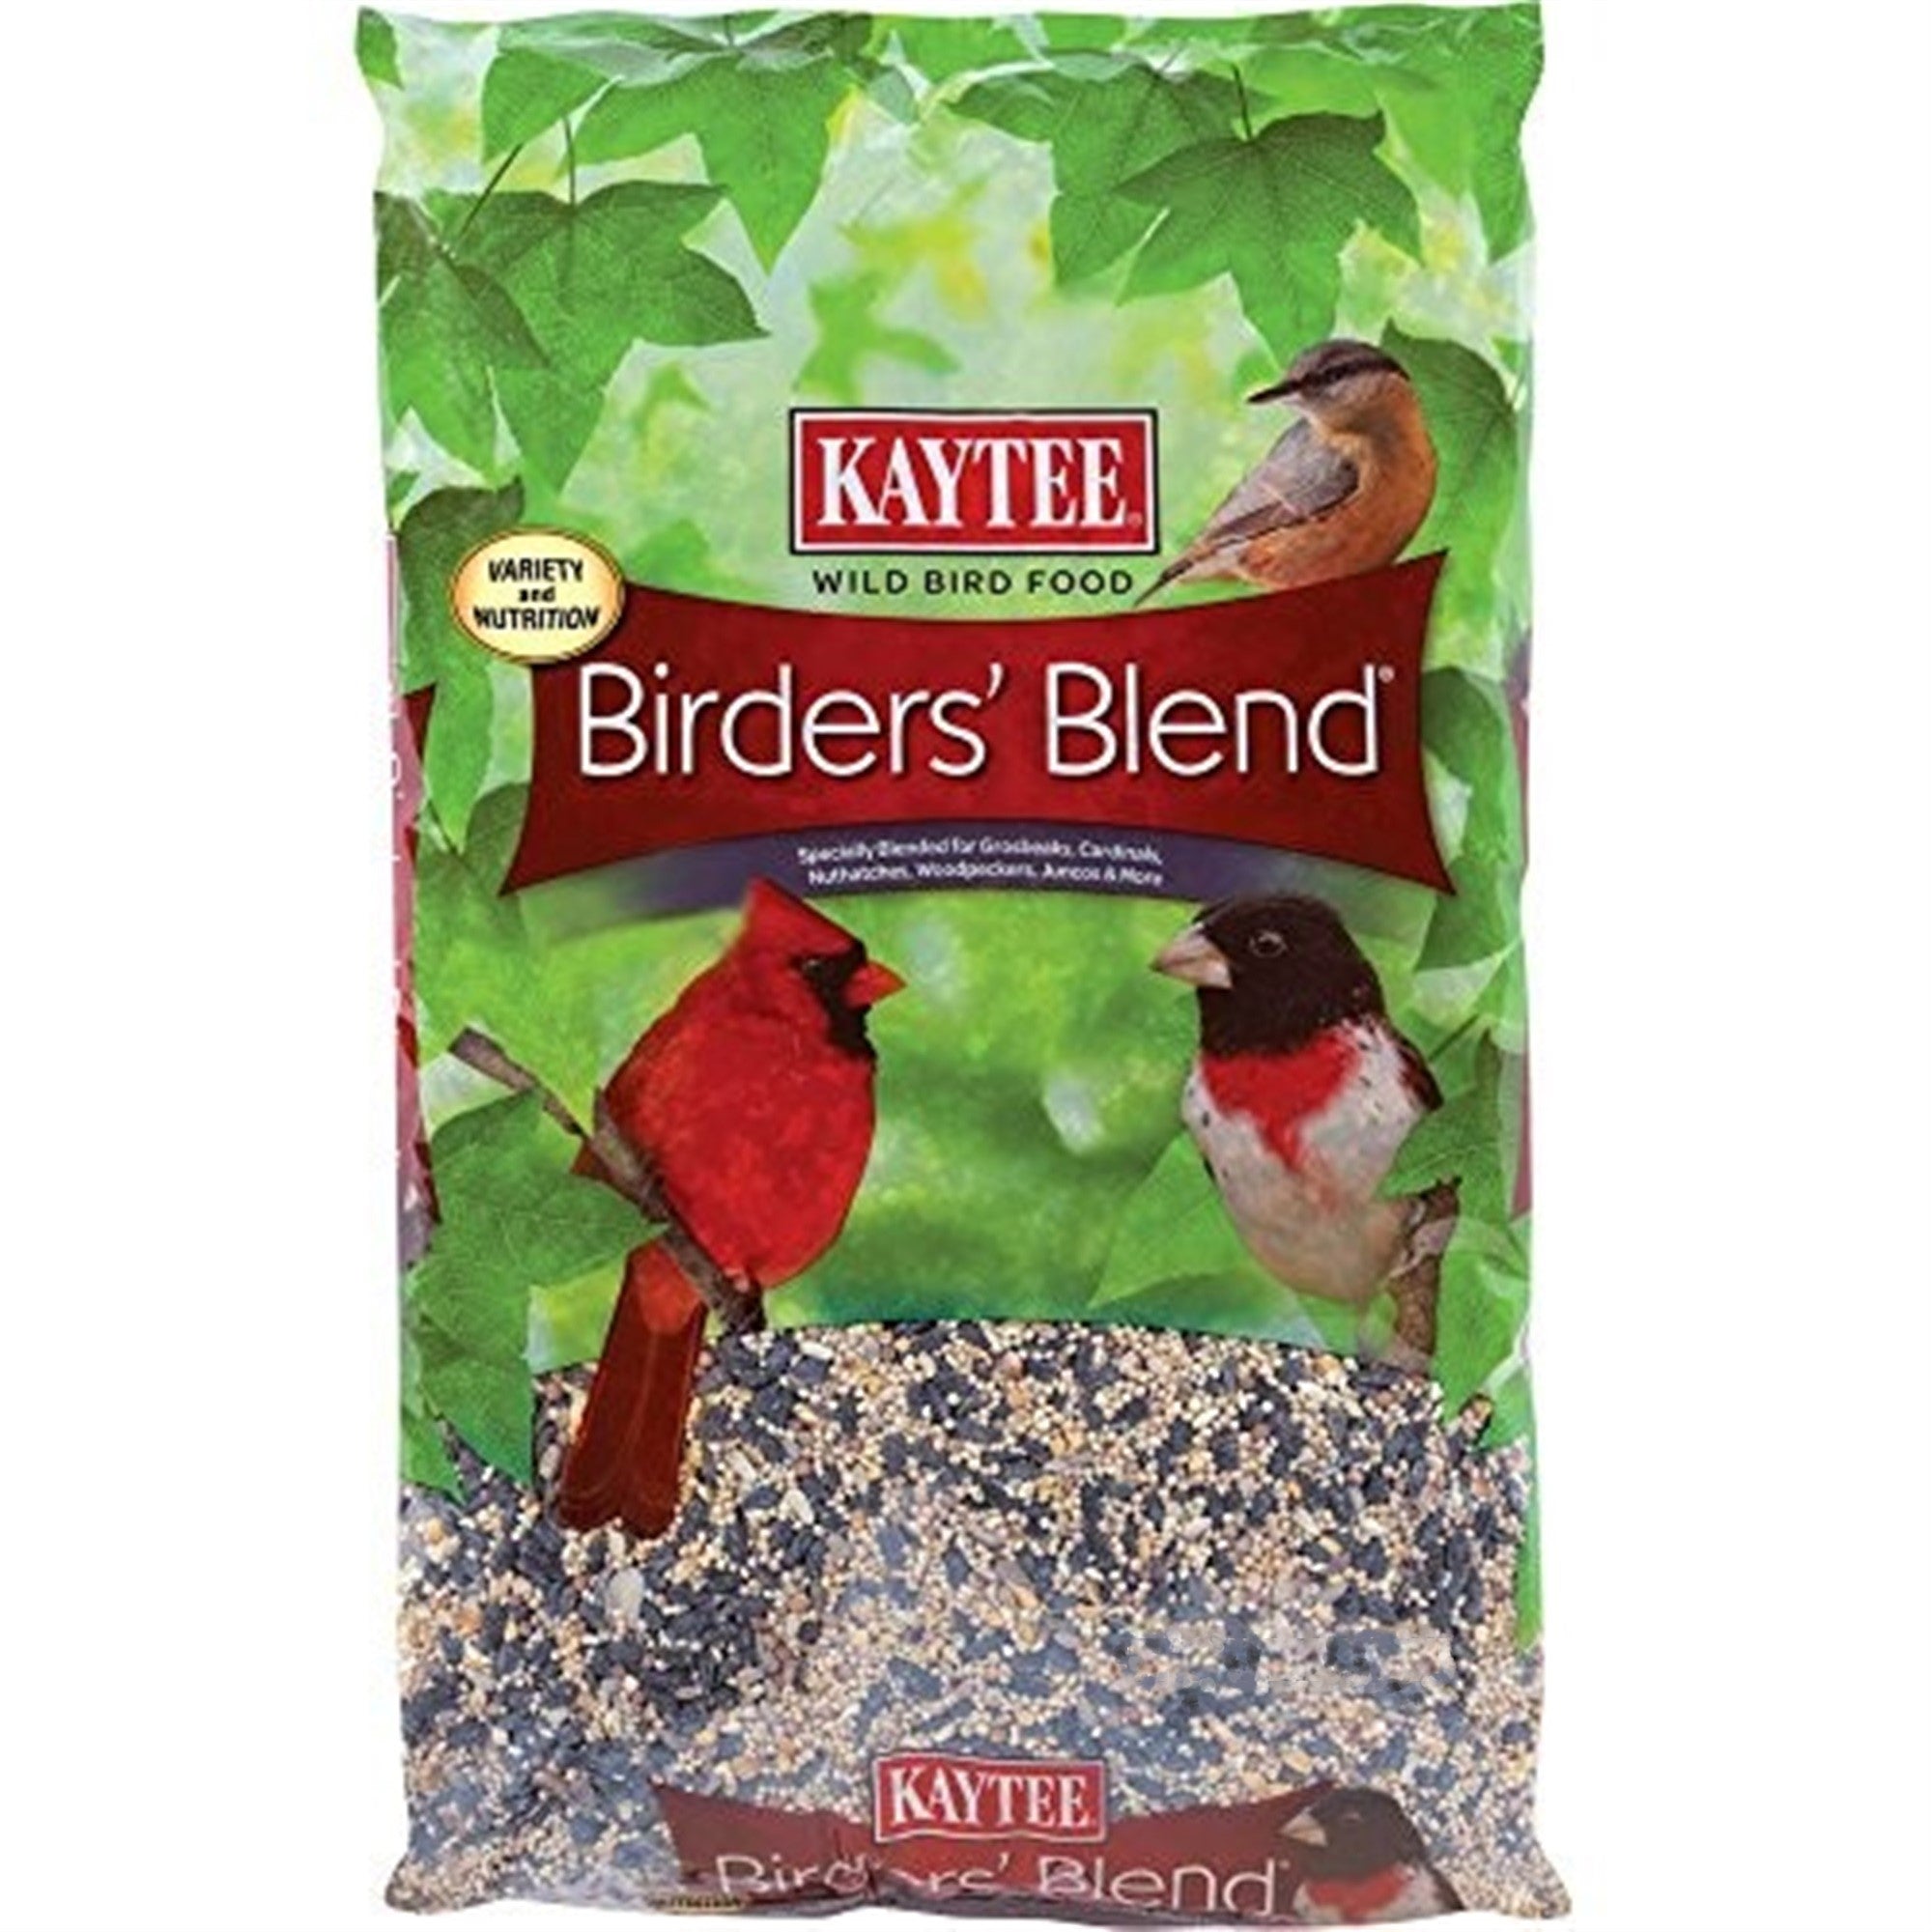 Kaytee Wild Bird Food, Birders' Blend